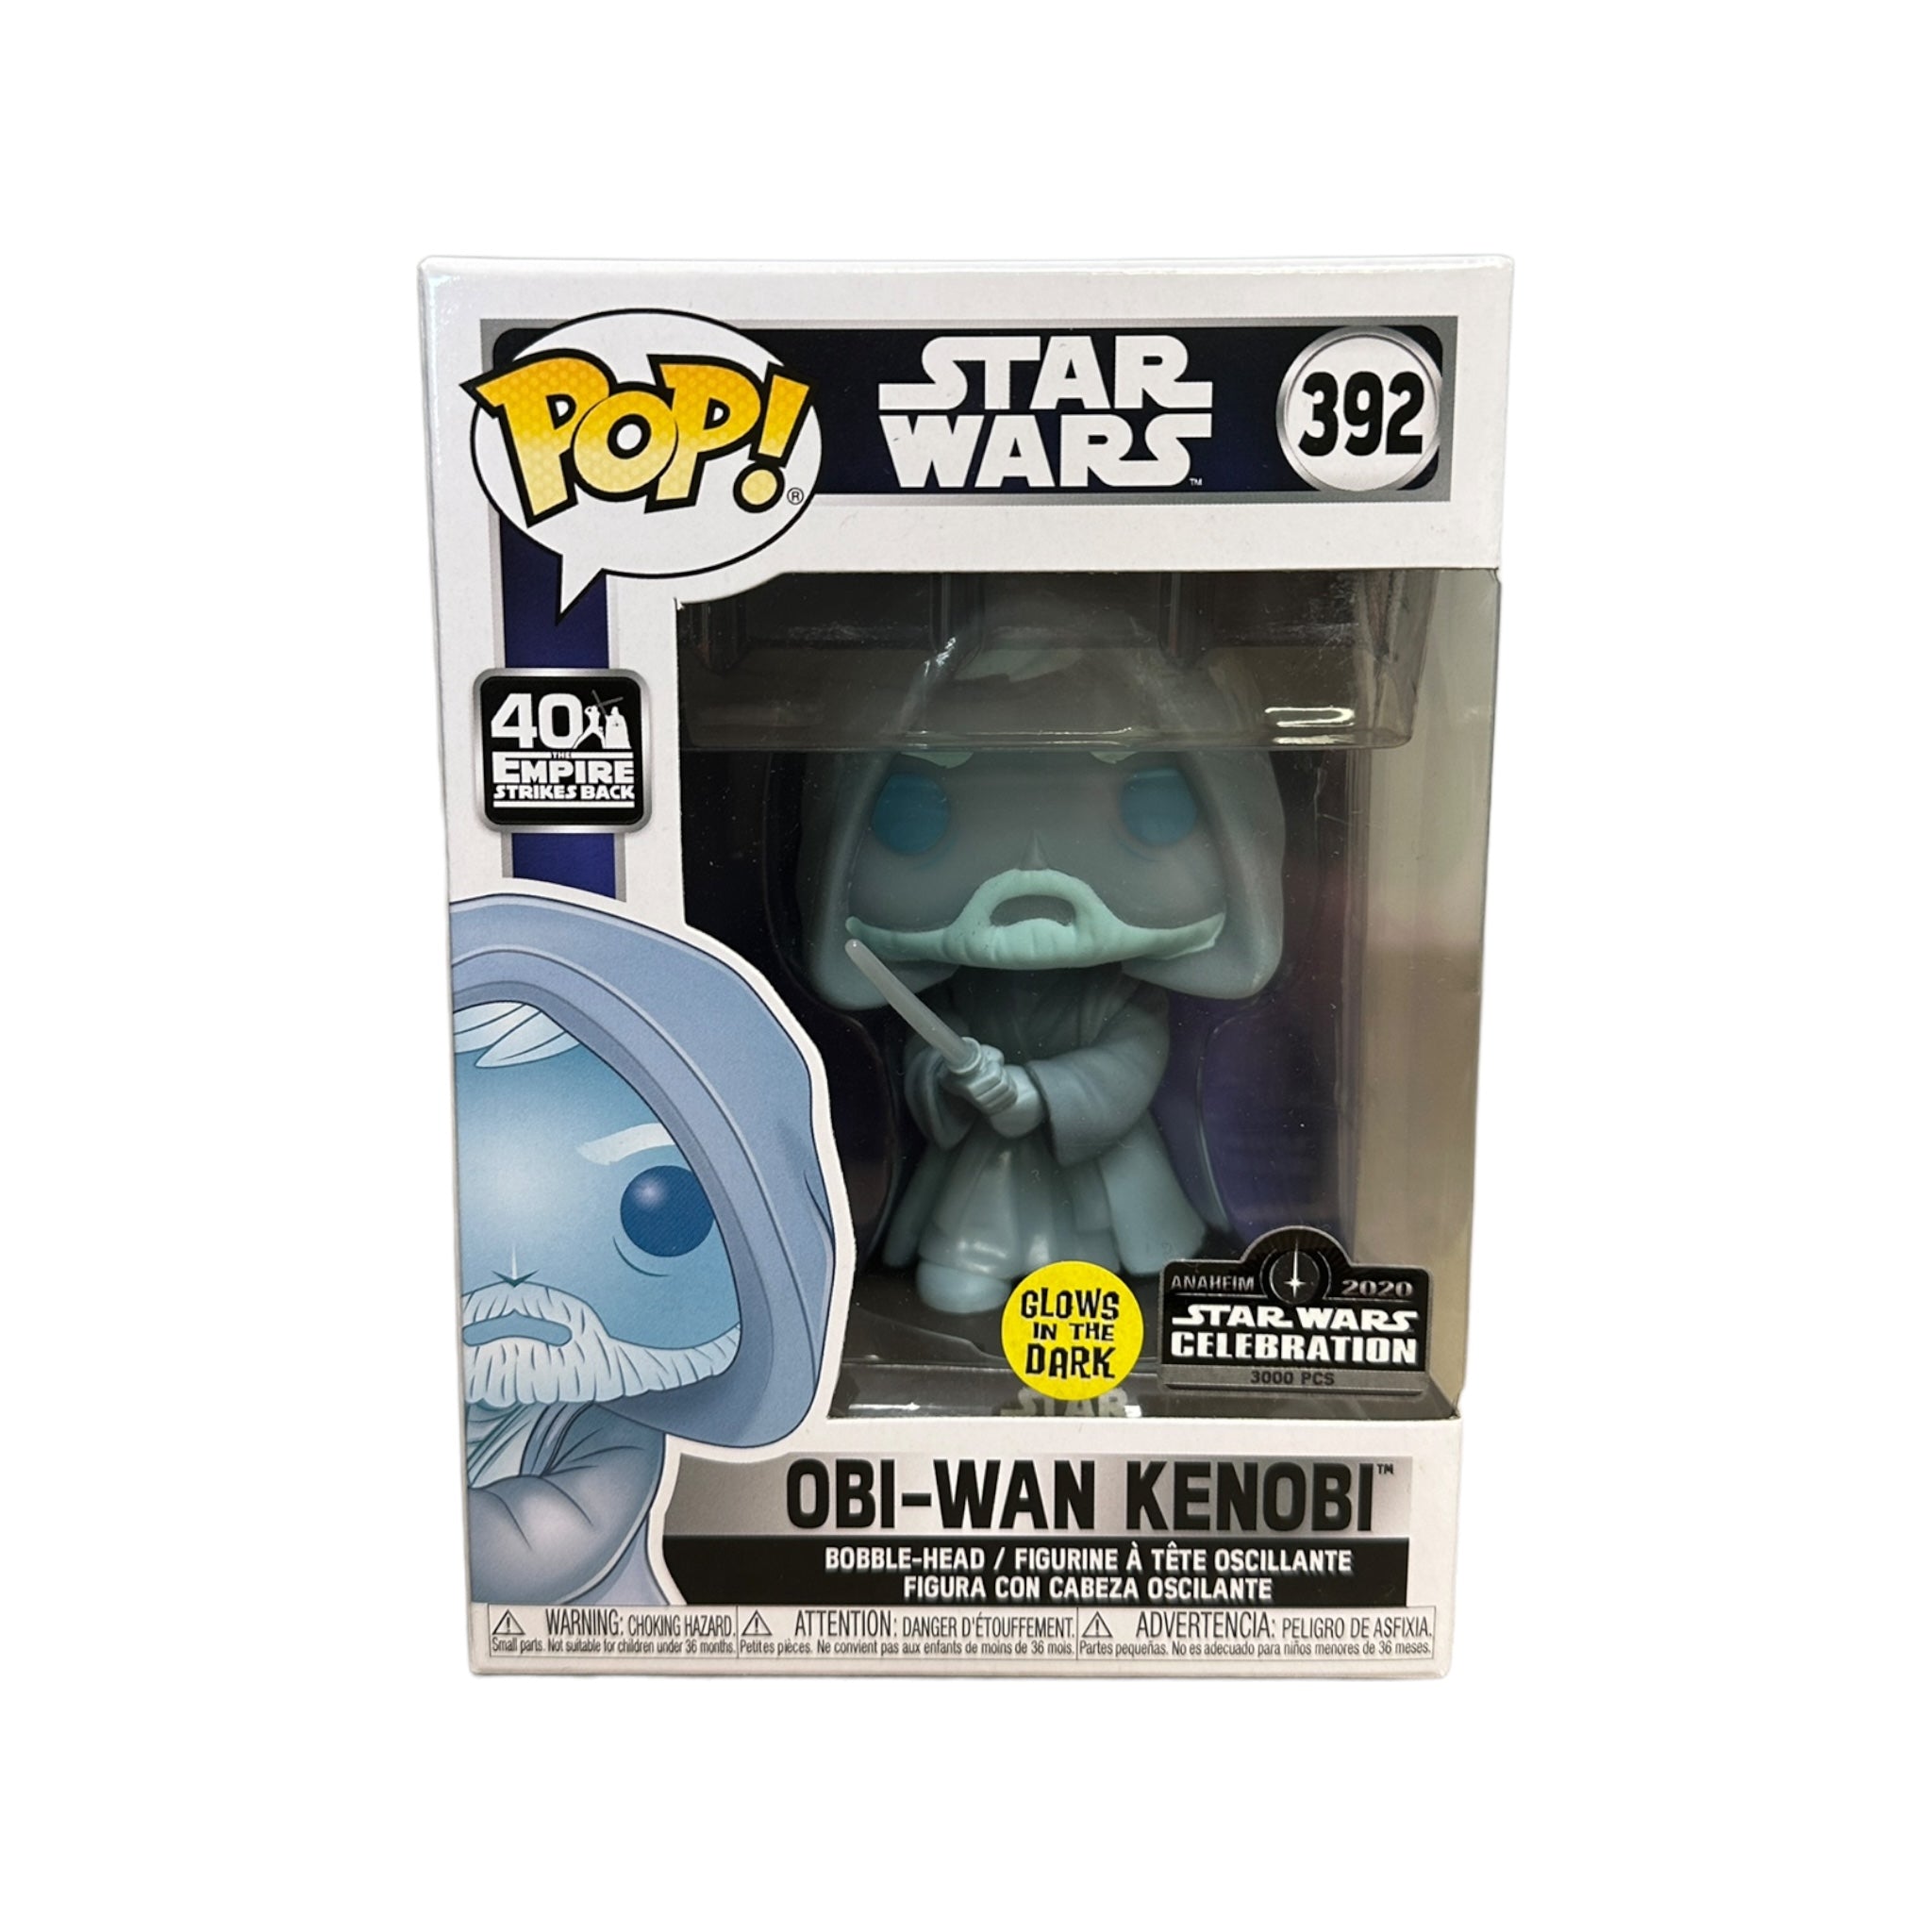 Obi-Wan Kenobi #392 (Glows in the Dark) - Star Wars: The Empire Strikes Back 40th Anniversary - ASWC 2020 Exclusive LE3000 Pcs - Condition 9/10